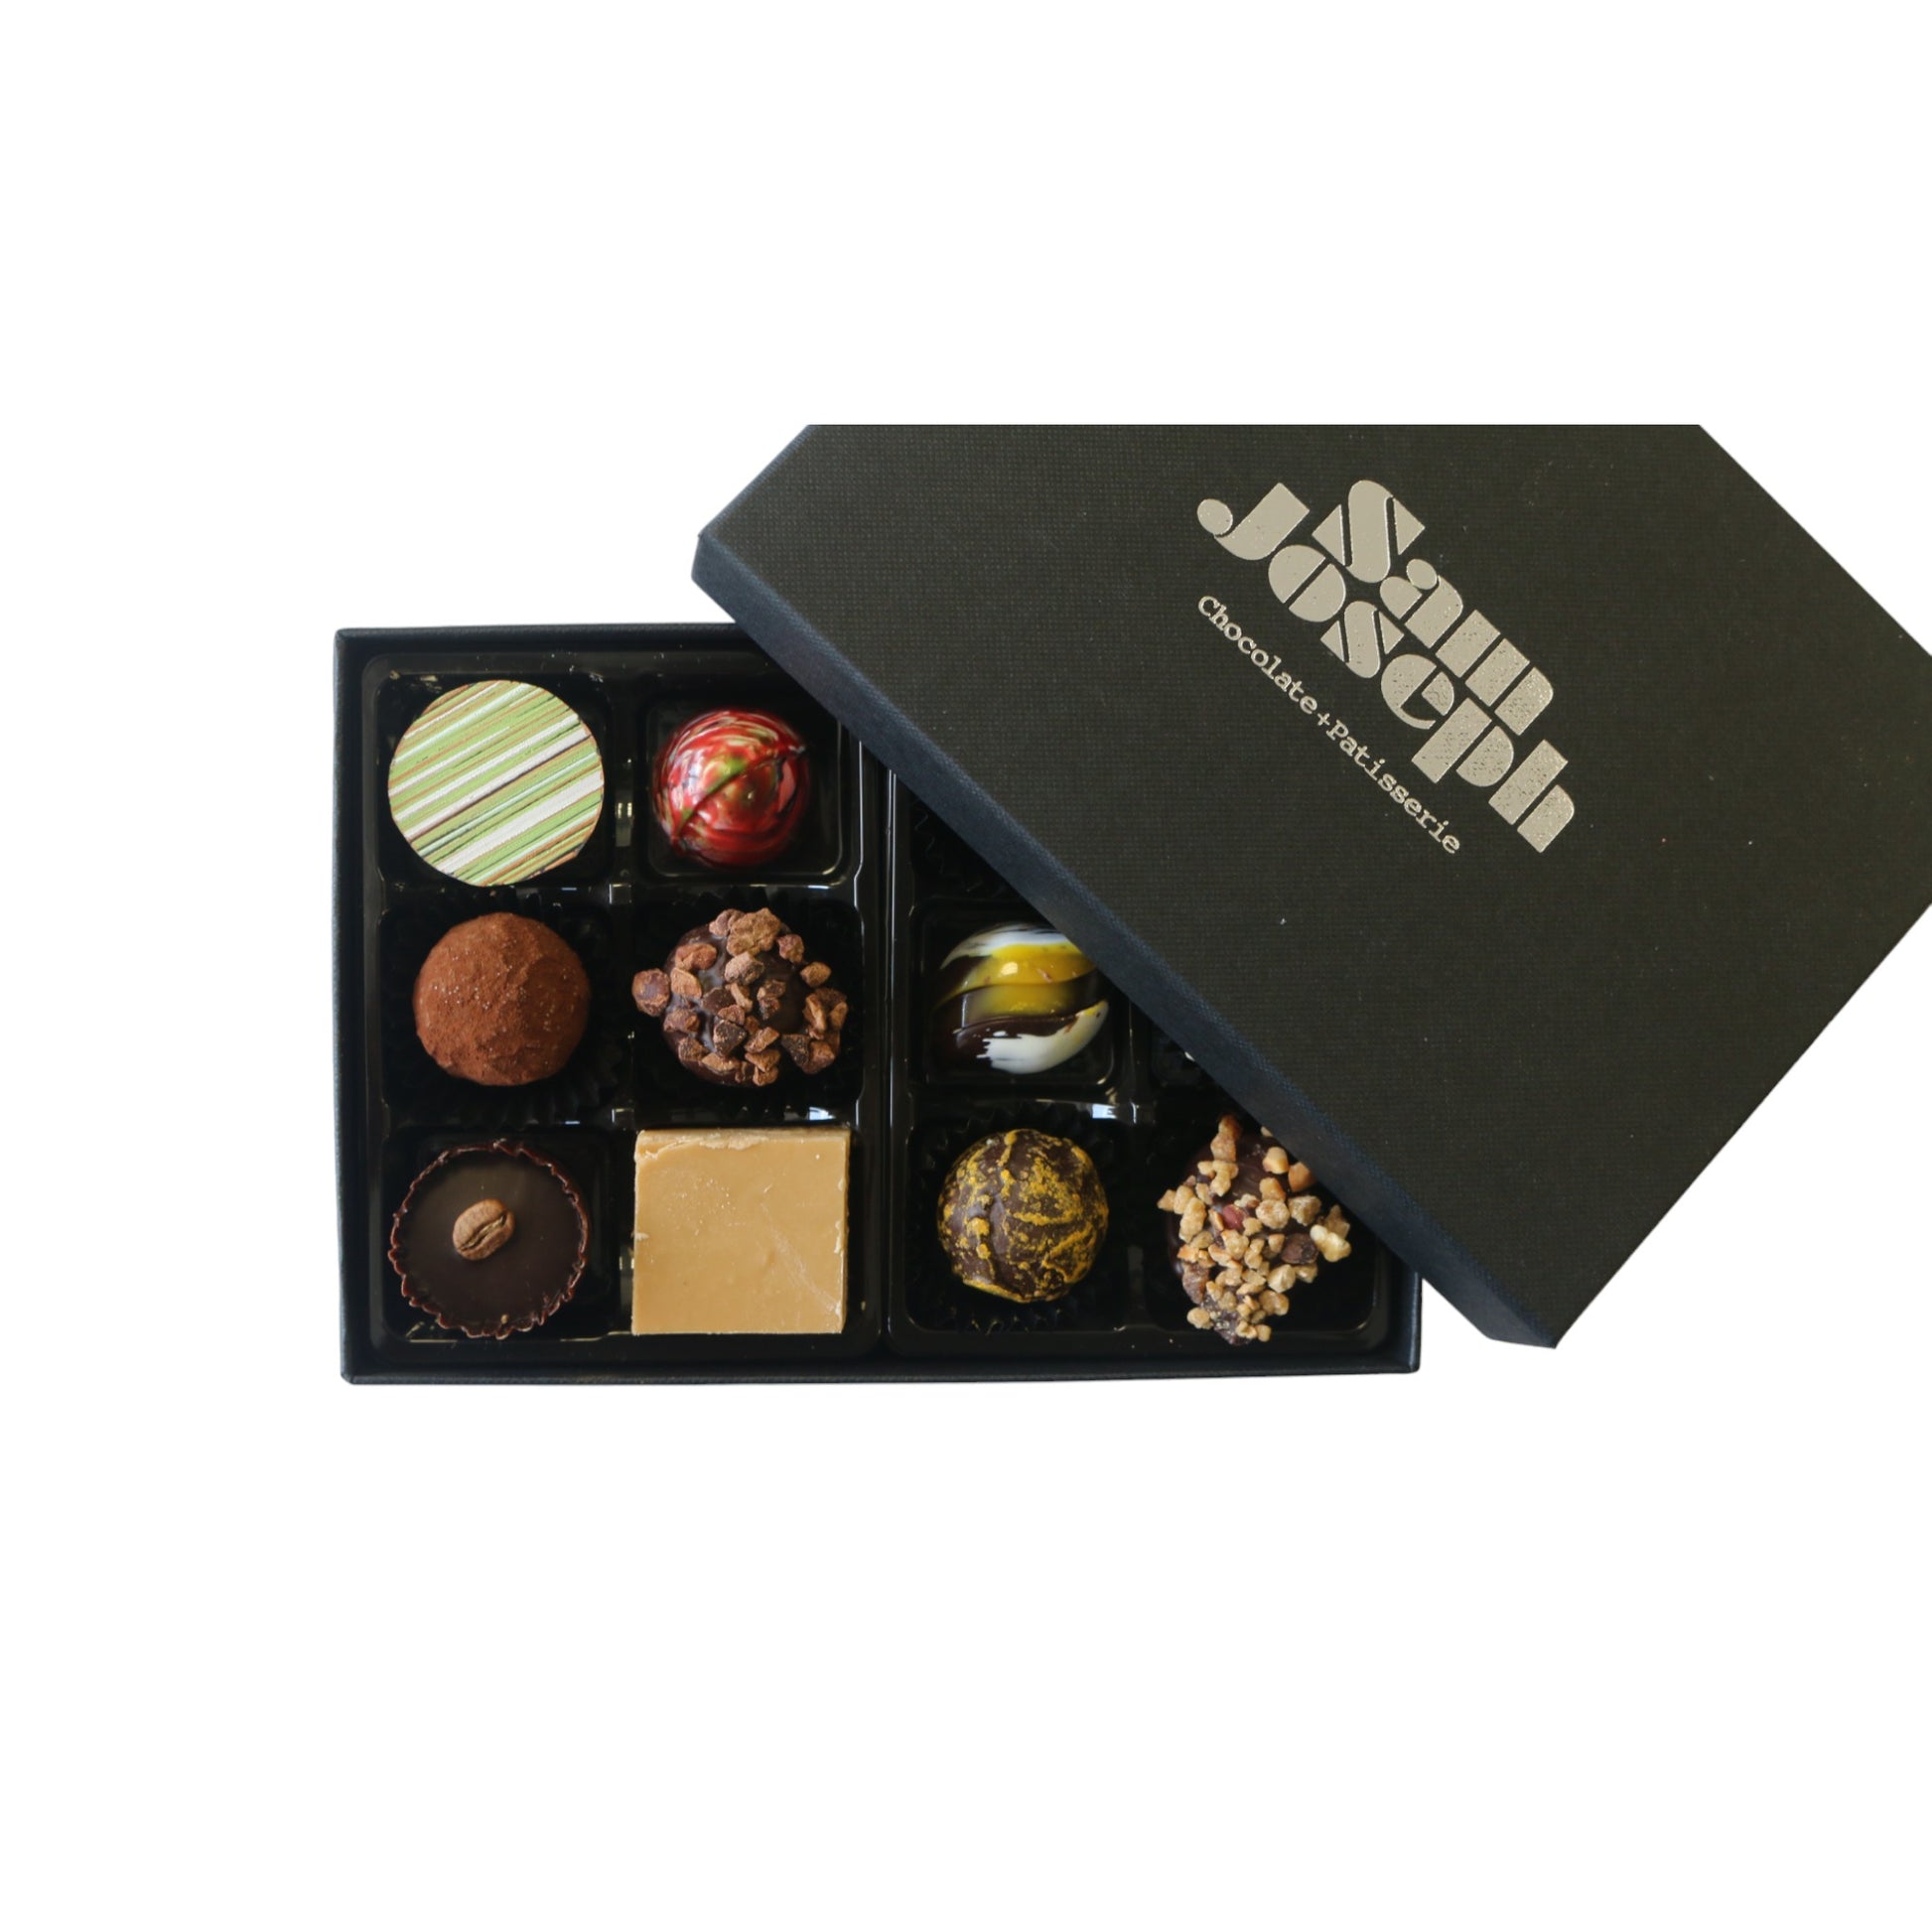 Mixed truffle selection - Sam Joseph chocolates